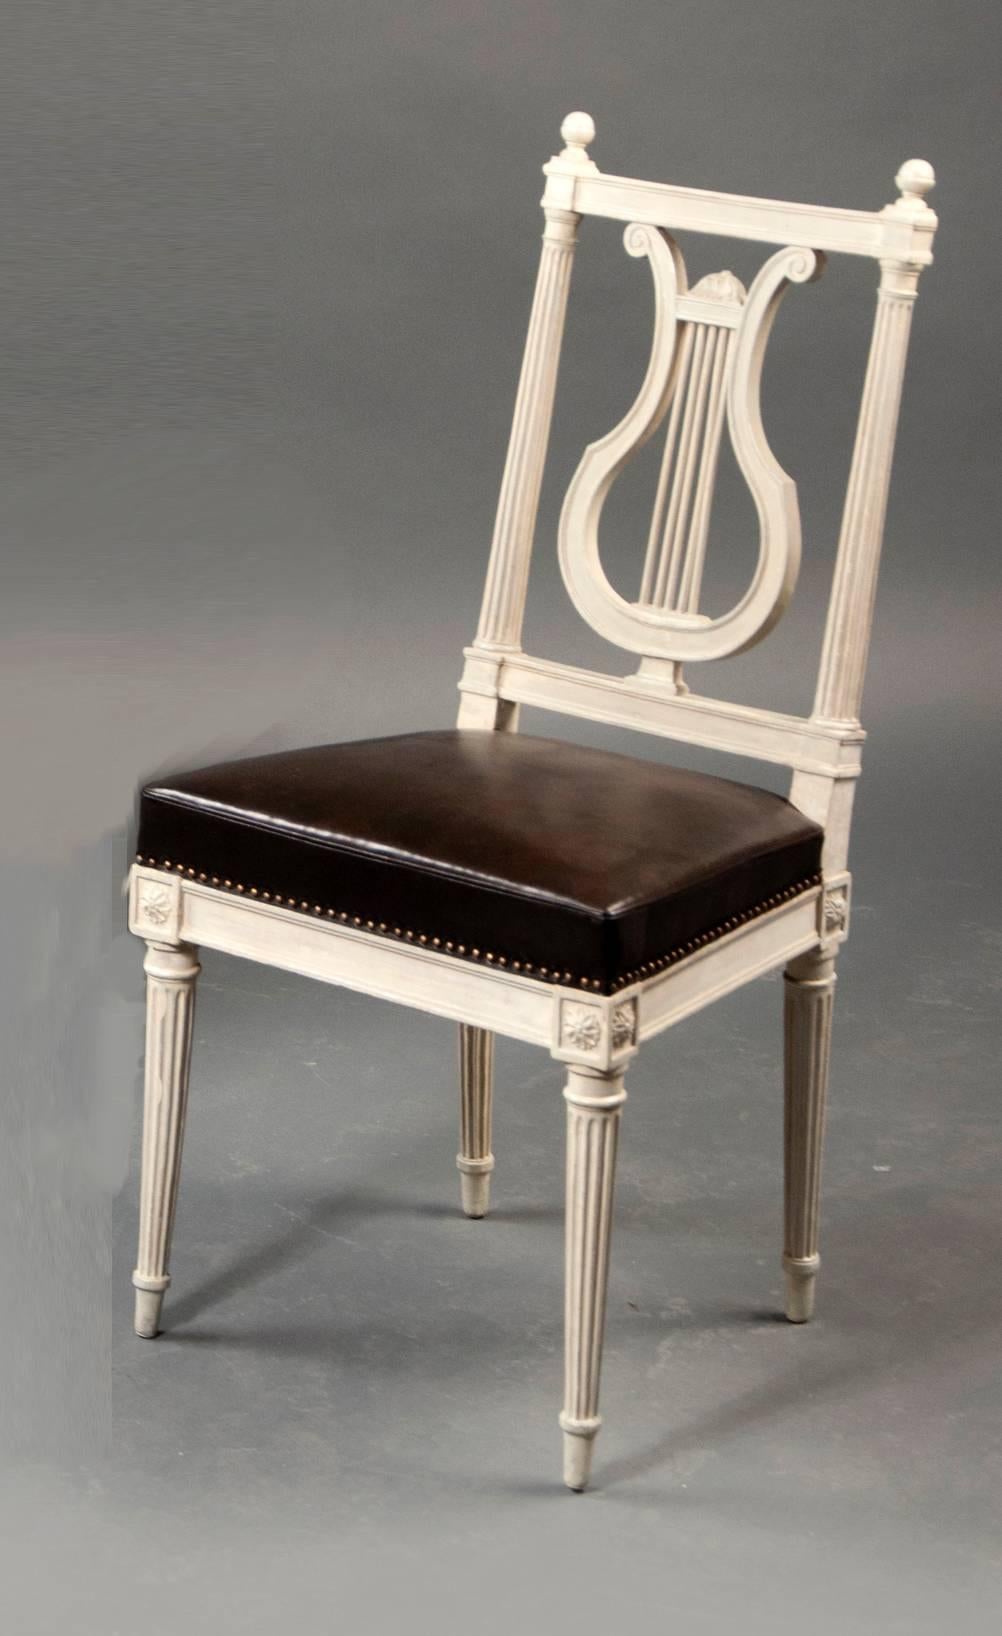 Set of Eight Chairs, Louis XVI, France, Late 18th Century (Louis XVI.)